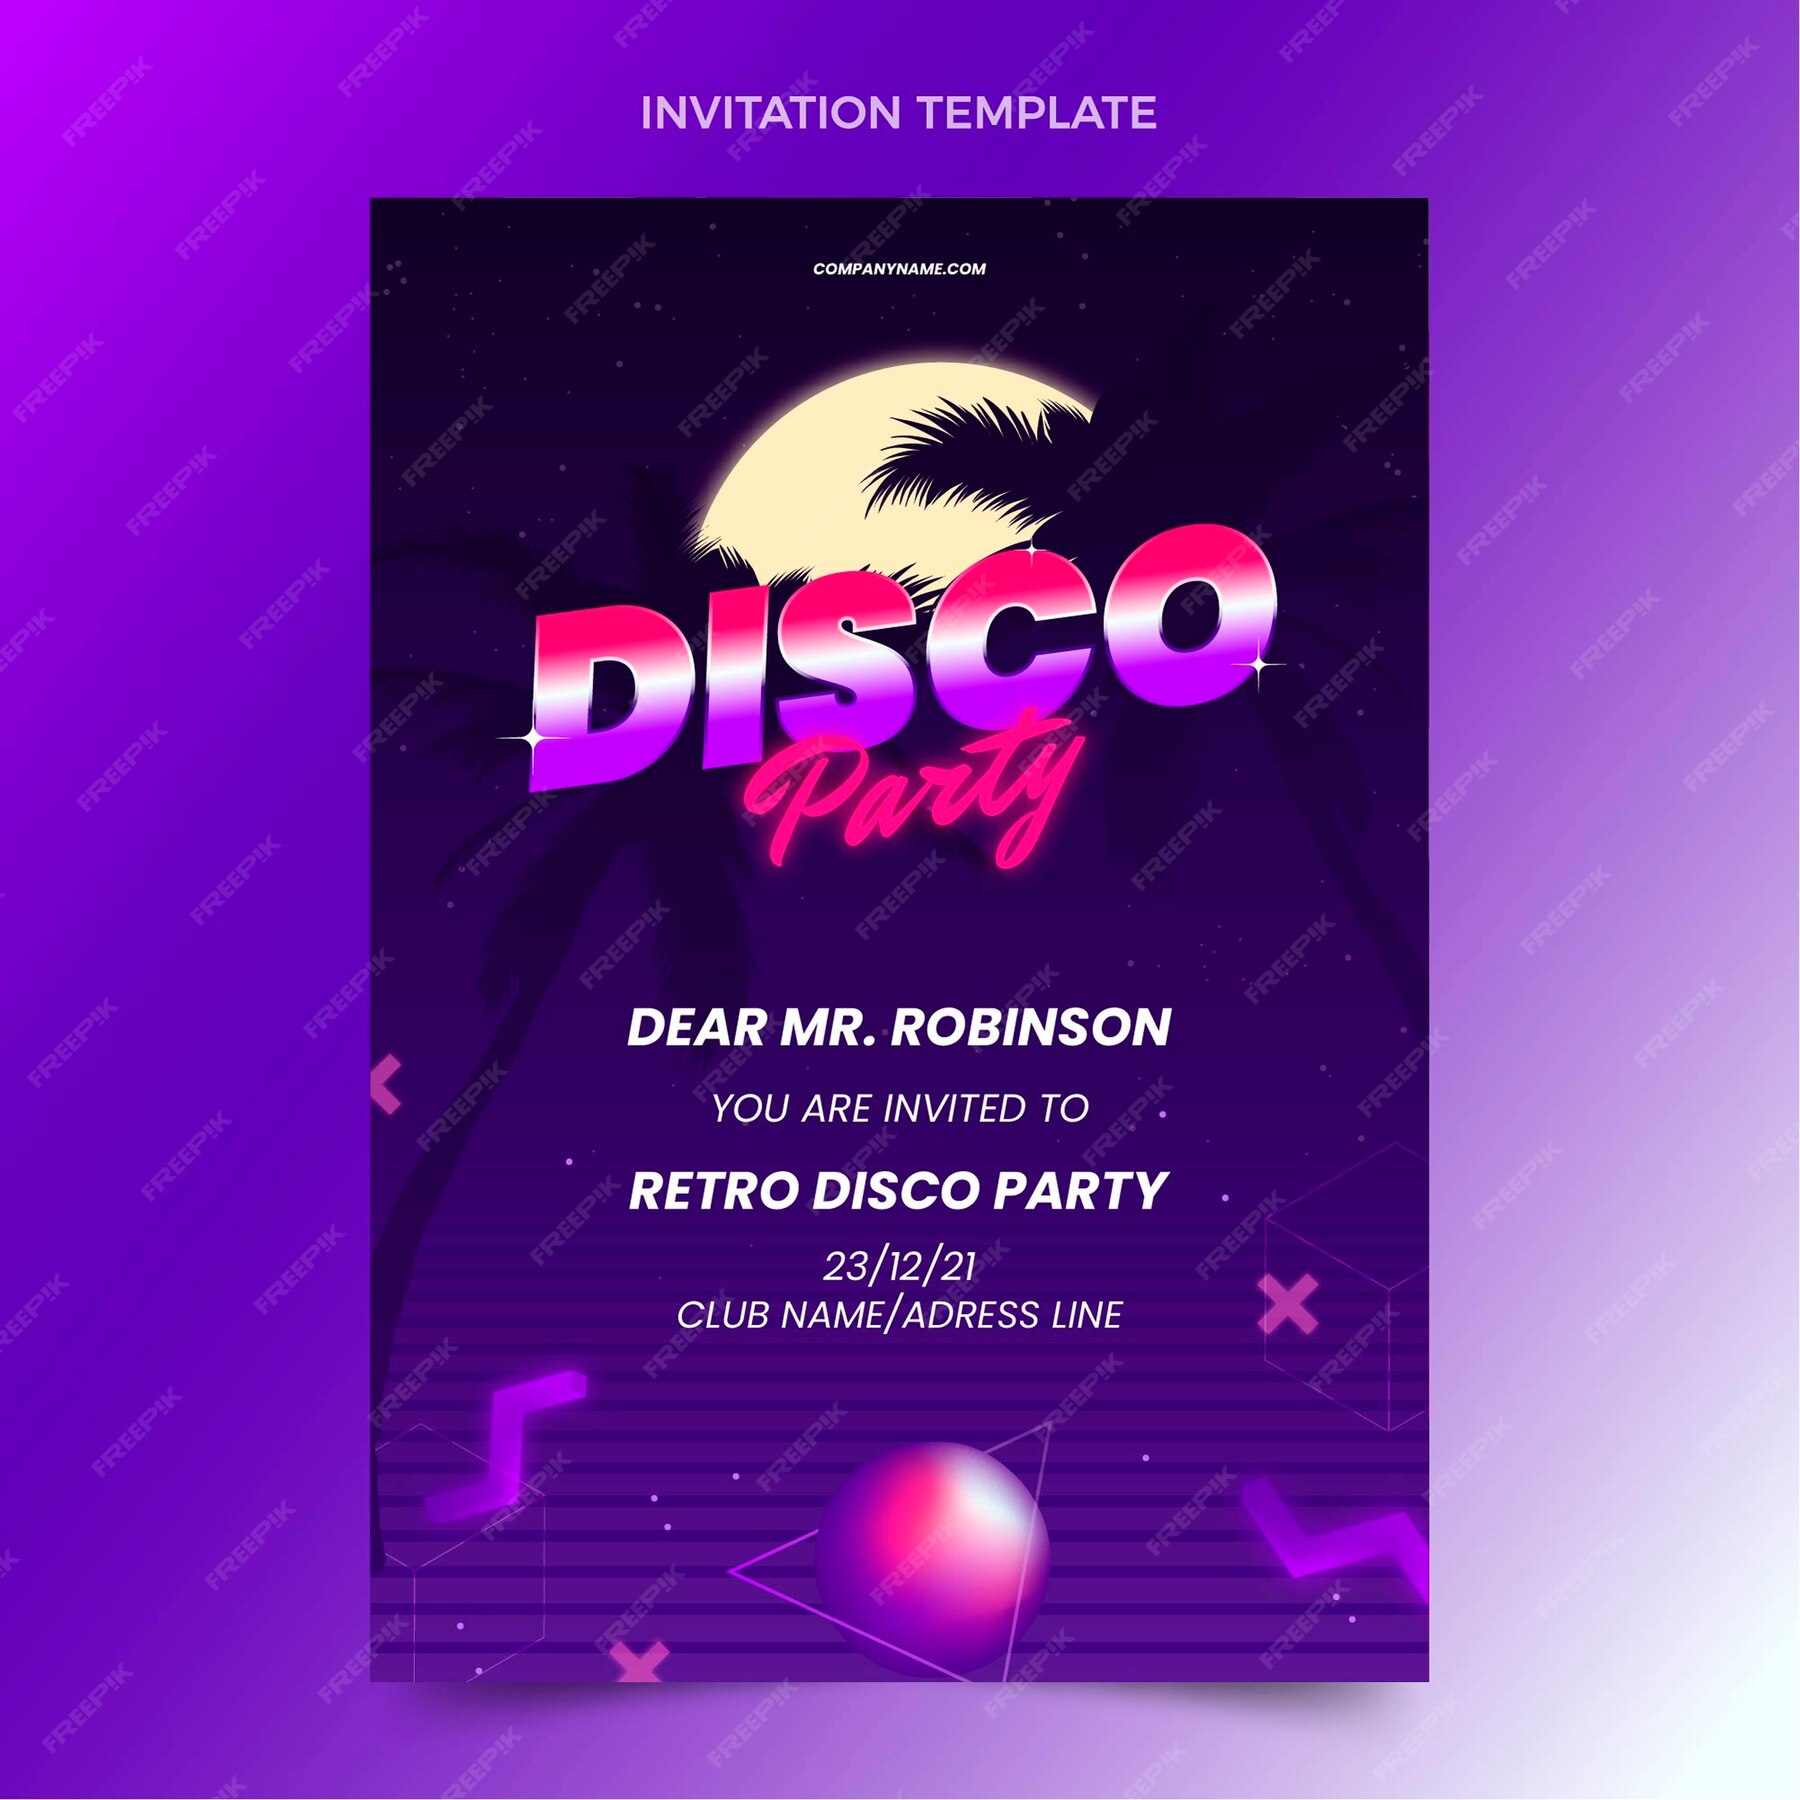 free-vector-gradient-retro-vaporwave-disco-party-invitation-template